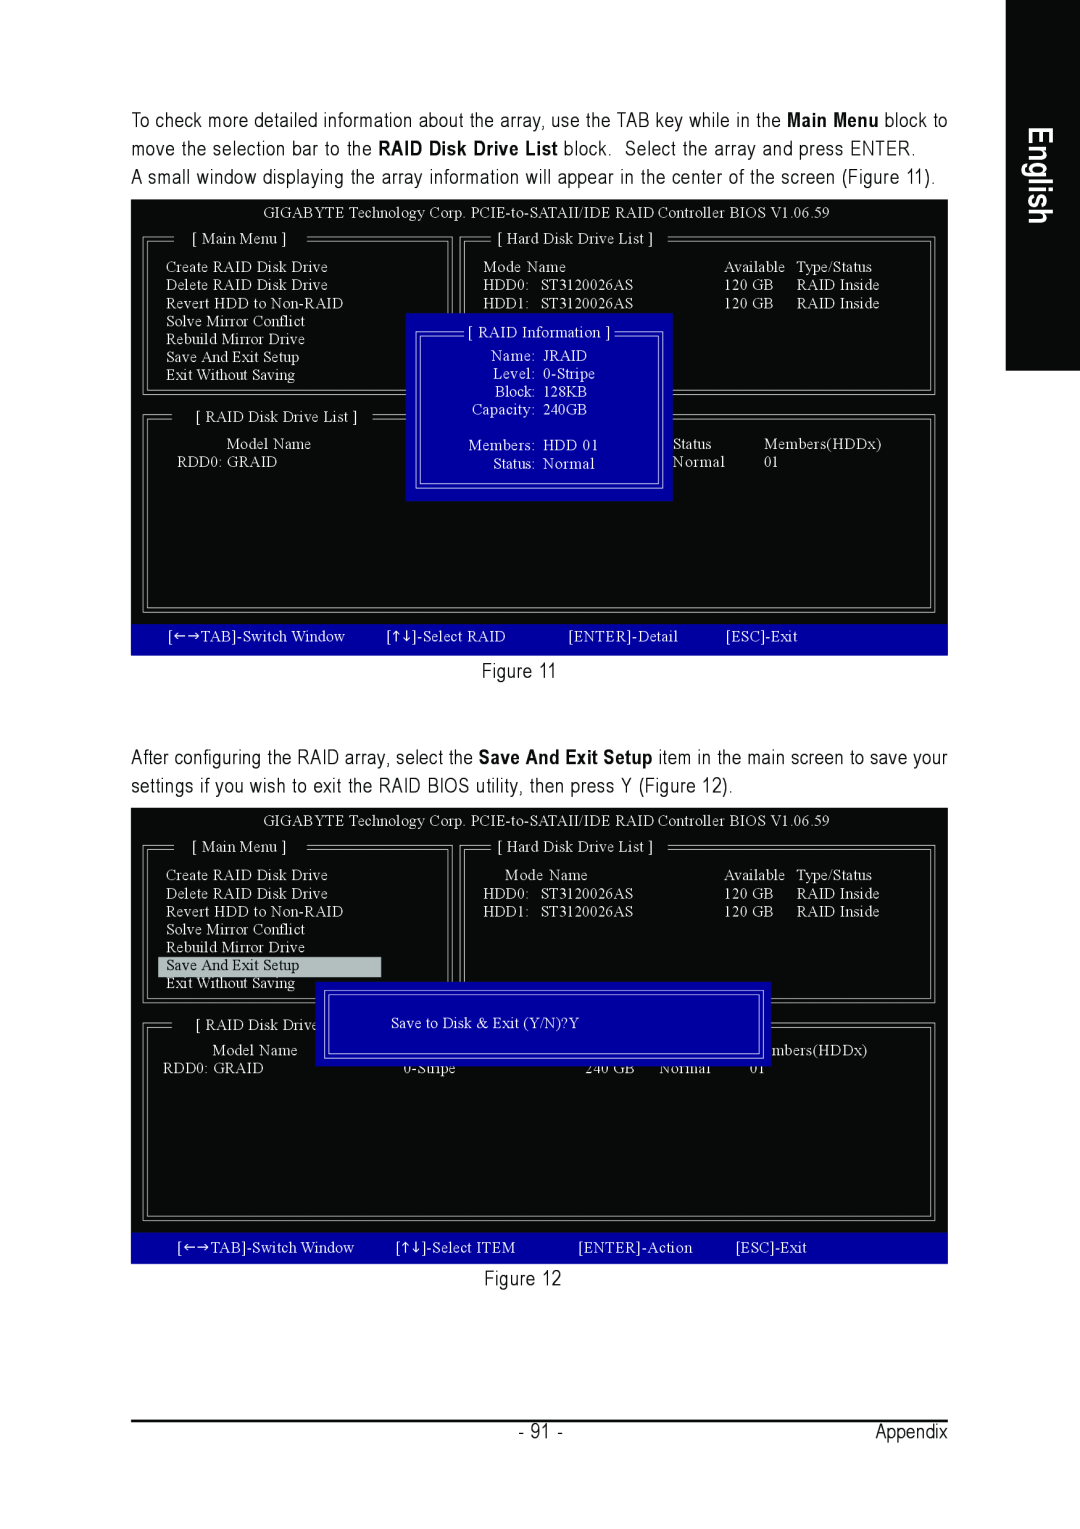 Intel GA-N680SLI-DQ6 user manual English, Save And Exit Setup 